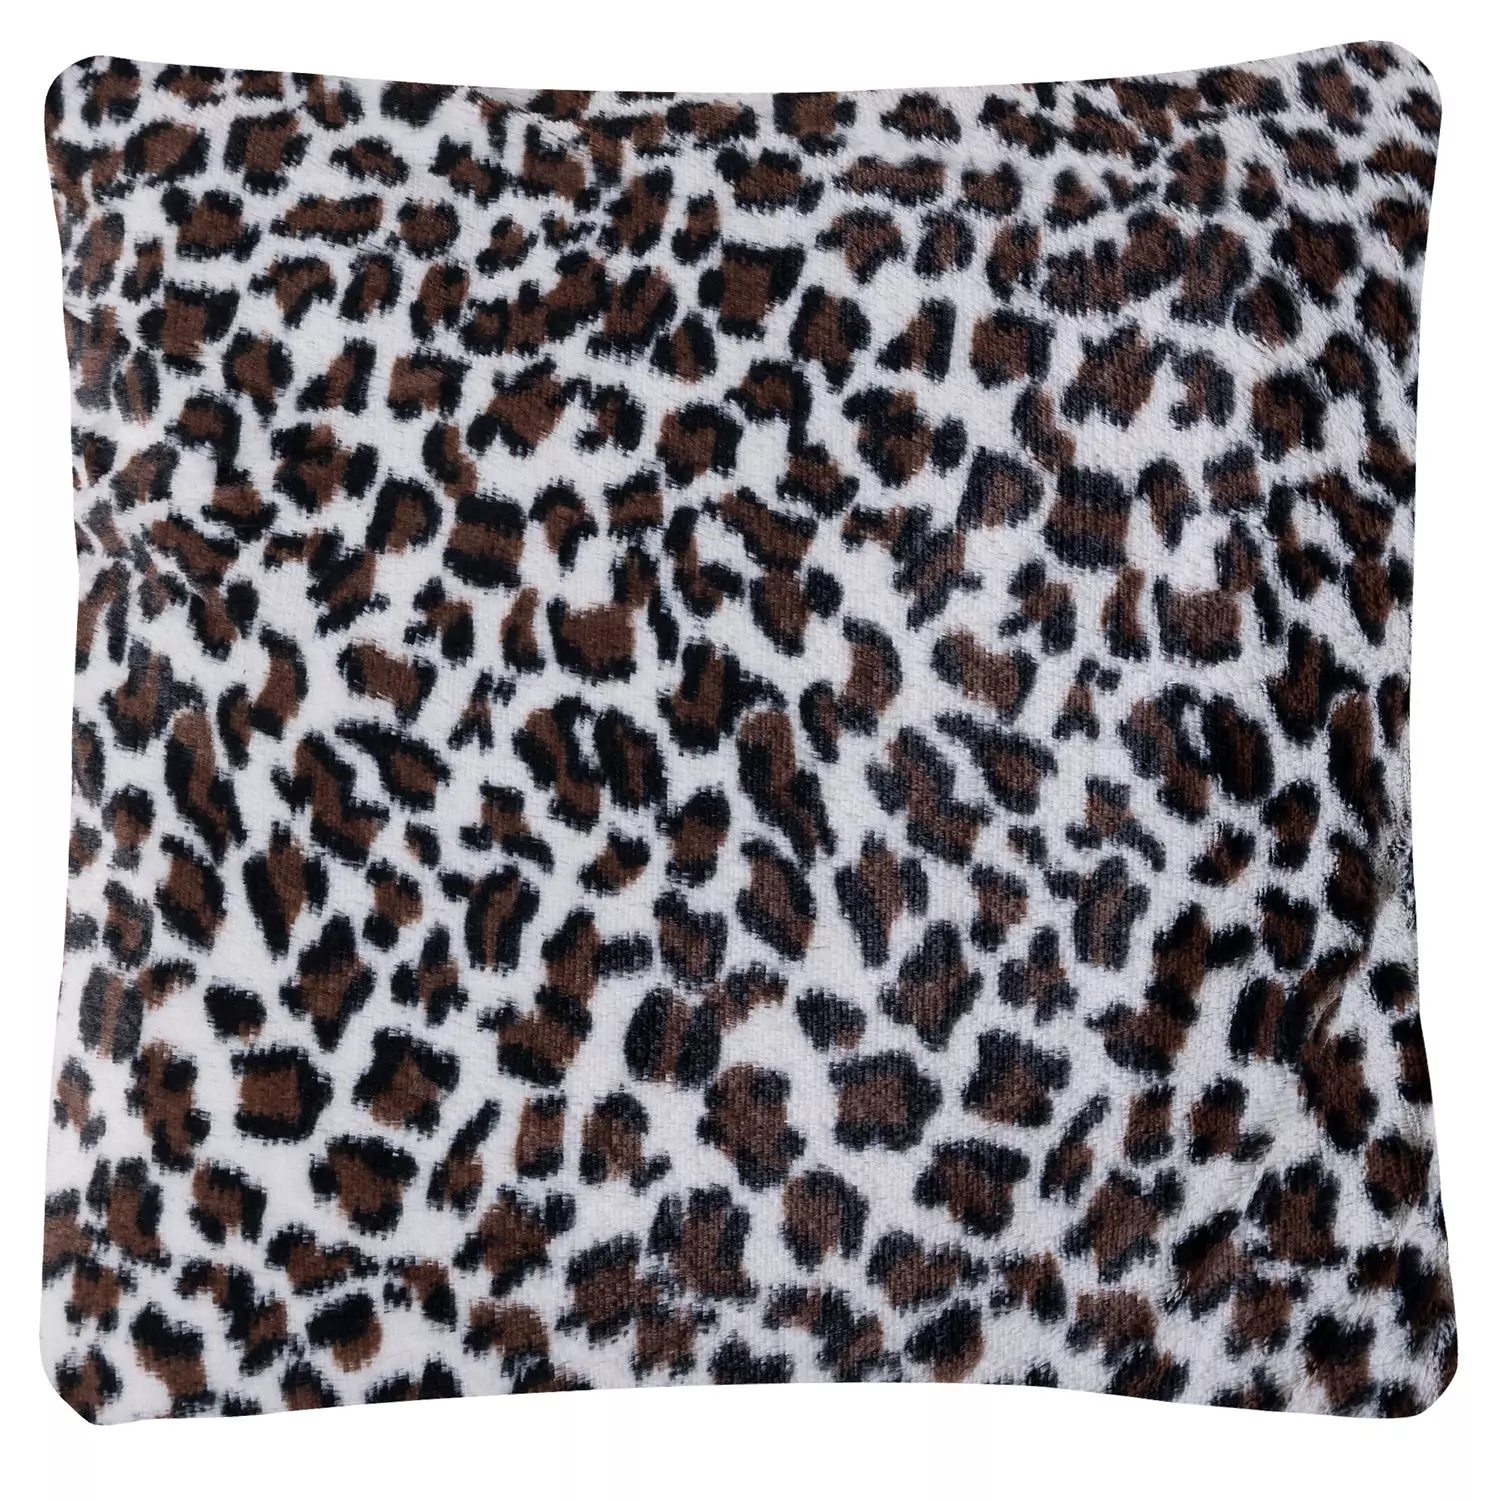 Soft plush cheetah print decorative cushion, 18"x18", light brown